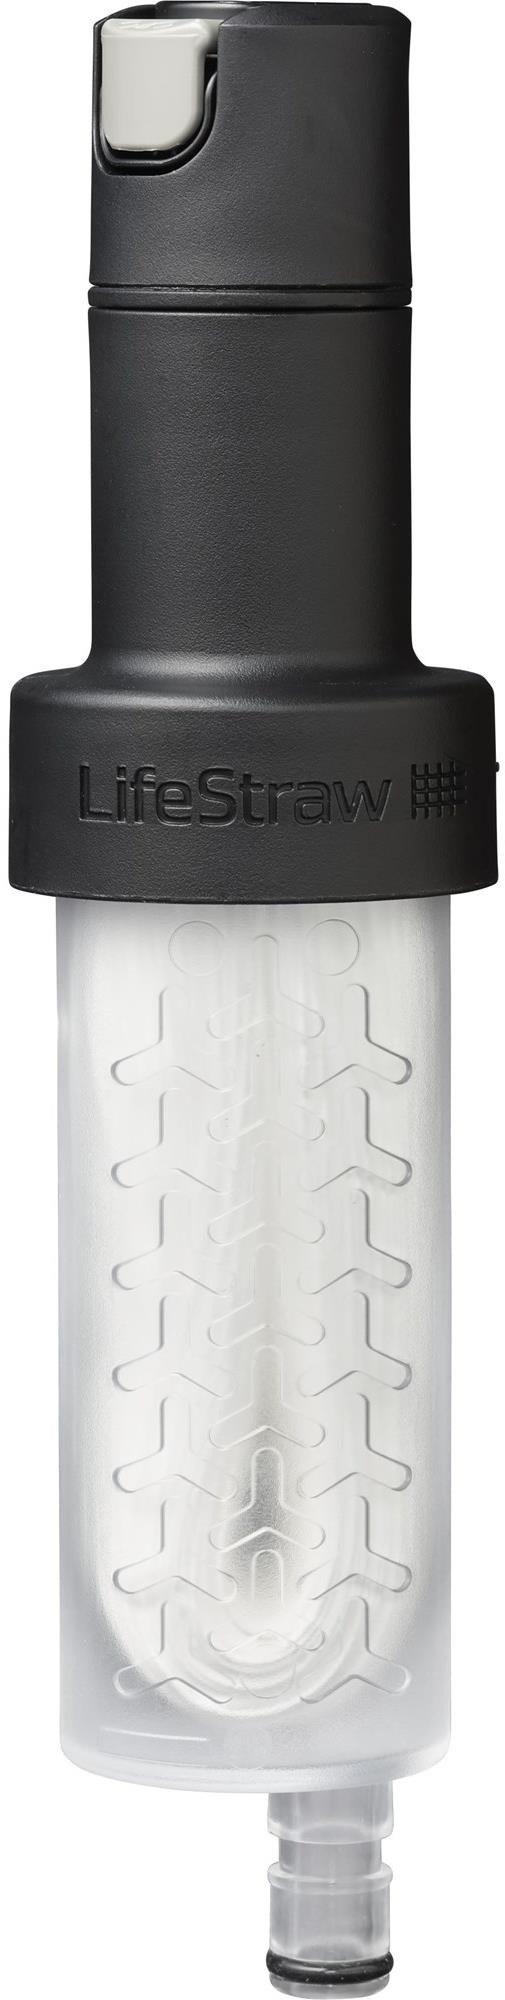 Lifestraw Reservoir Filter Kit image 1